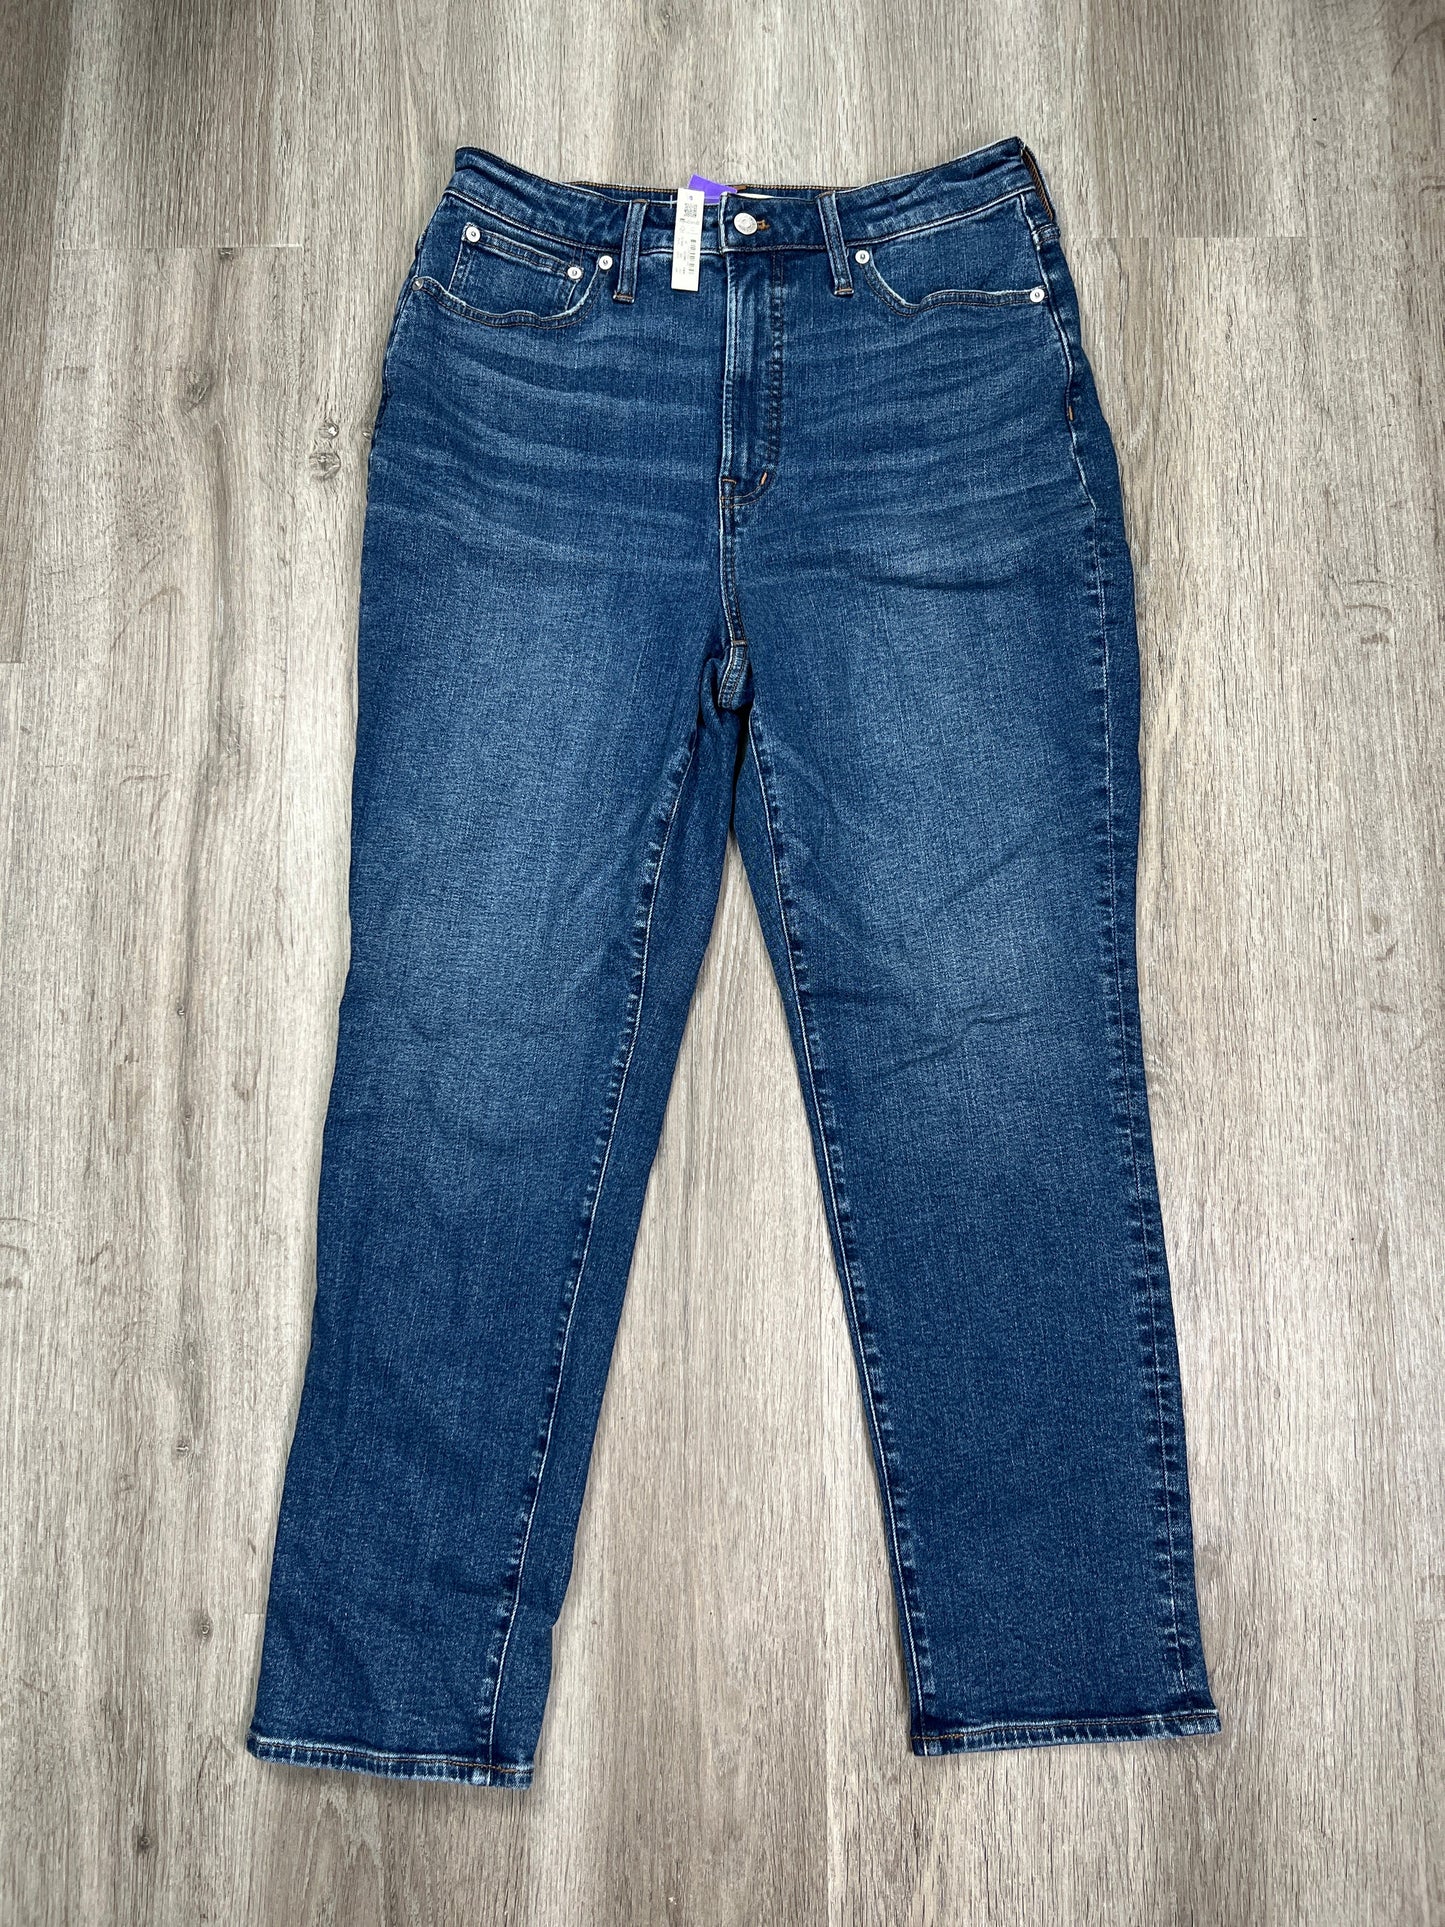 Blue Denim Jeans Boot Cut Madewell, Size 8